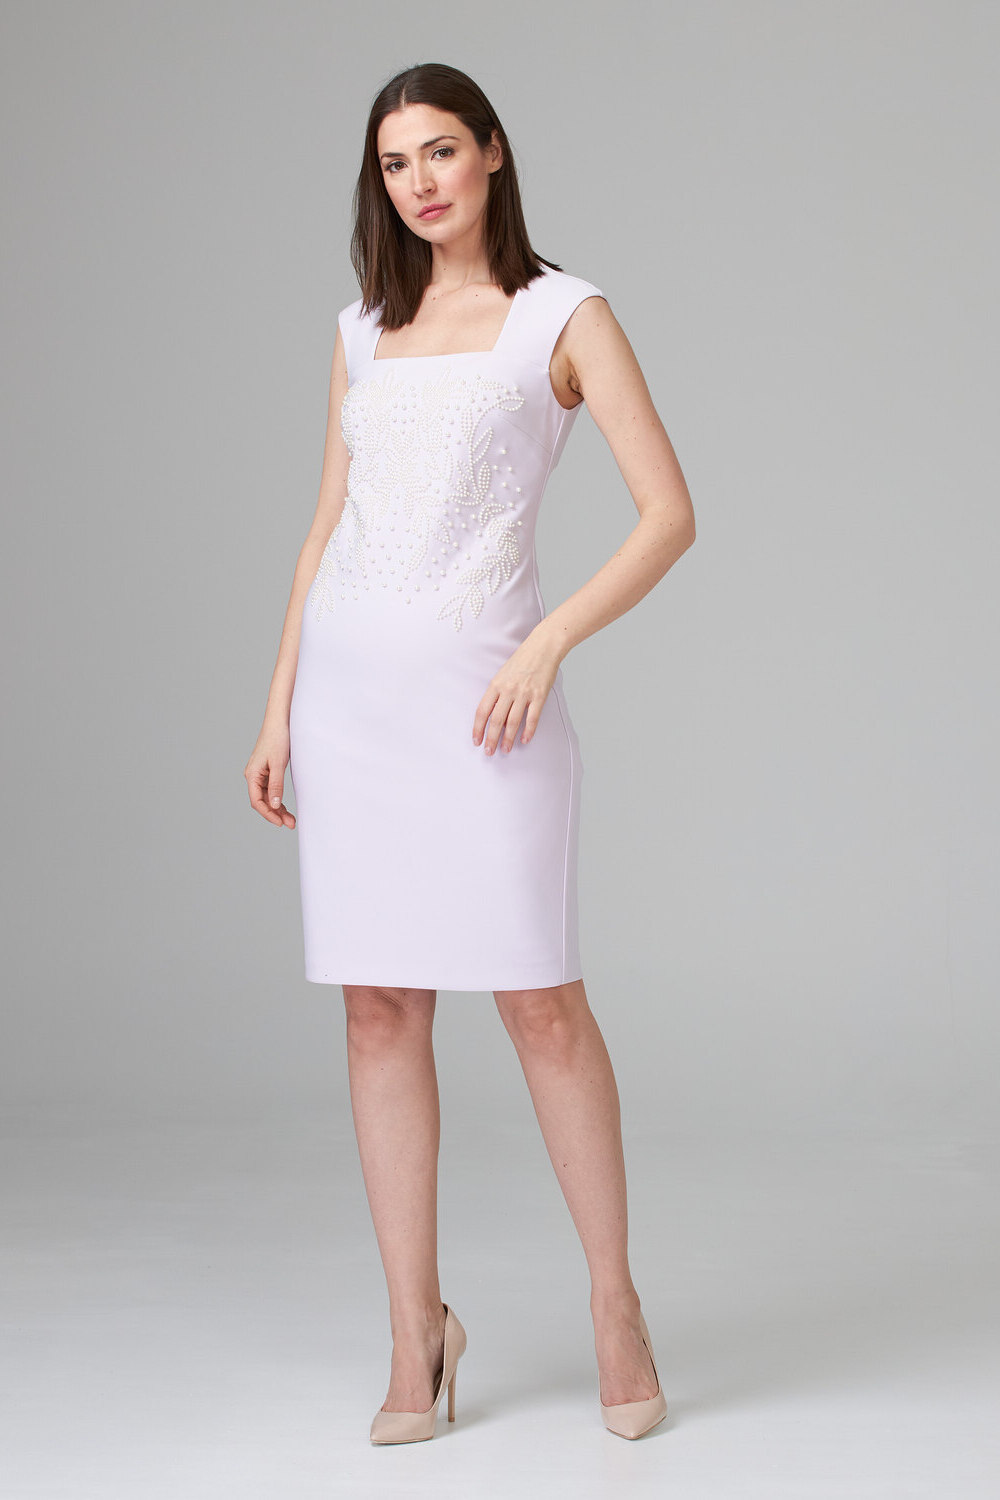 Joseph Ribkoff Dress Style 201218. Lavender Fog